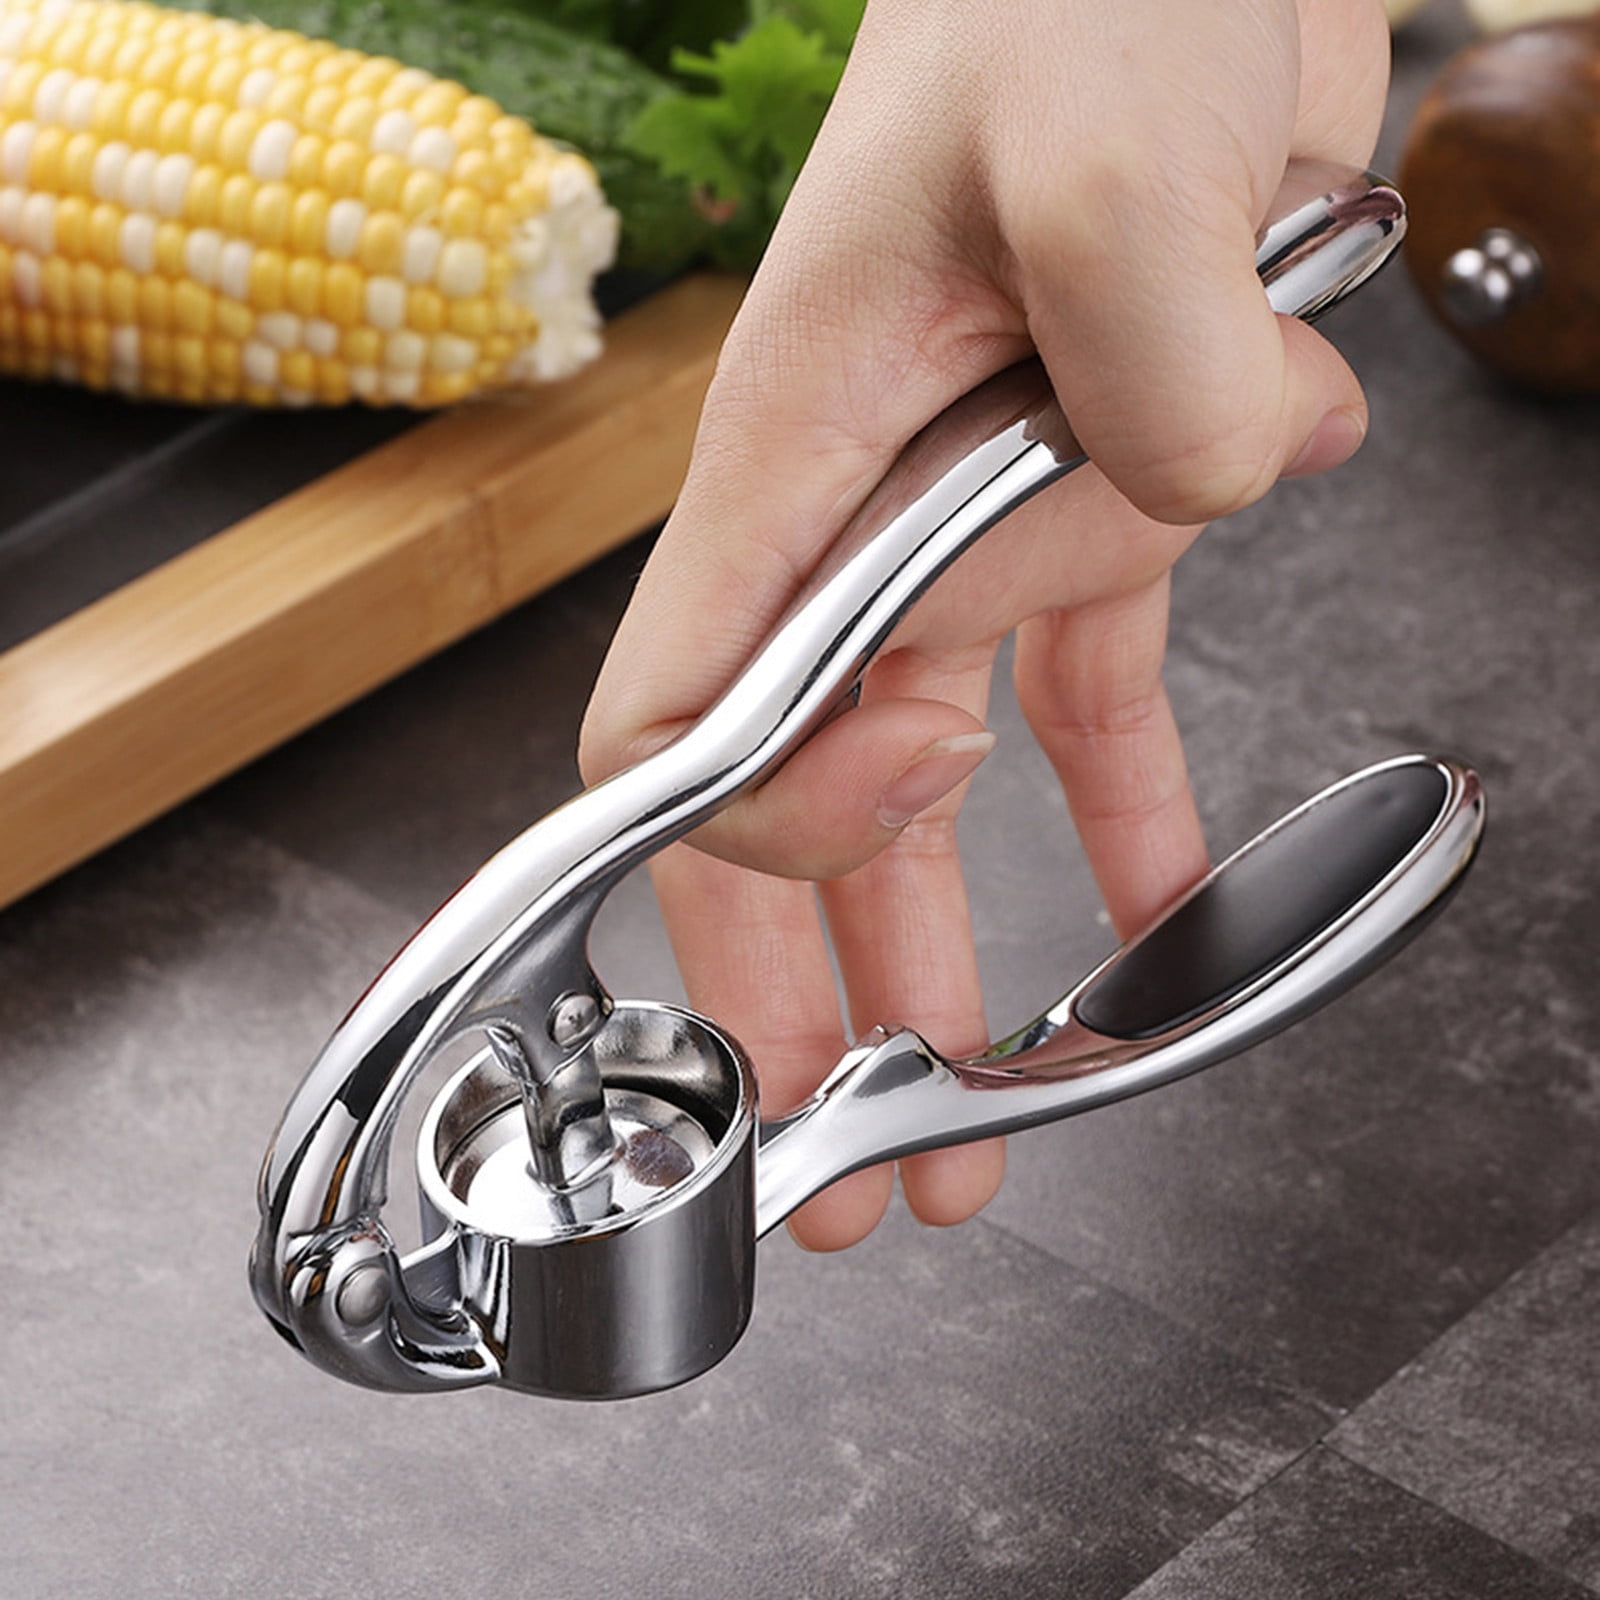 Stainless Steel Manual Garlic Press Crusher Squeezer Masher Home Kitchen Tool